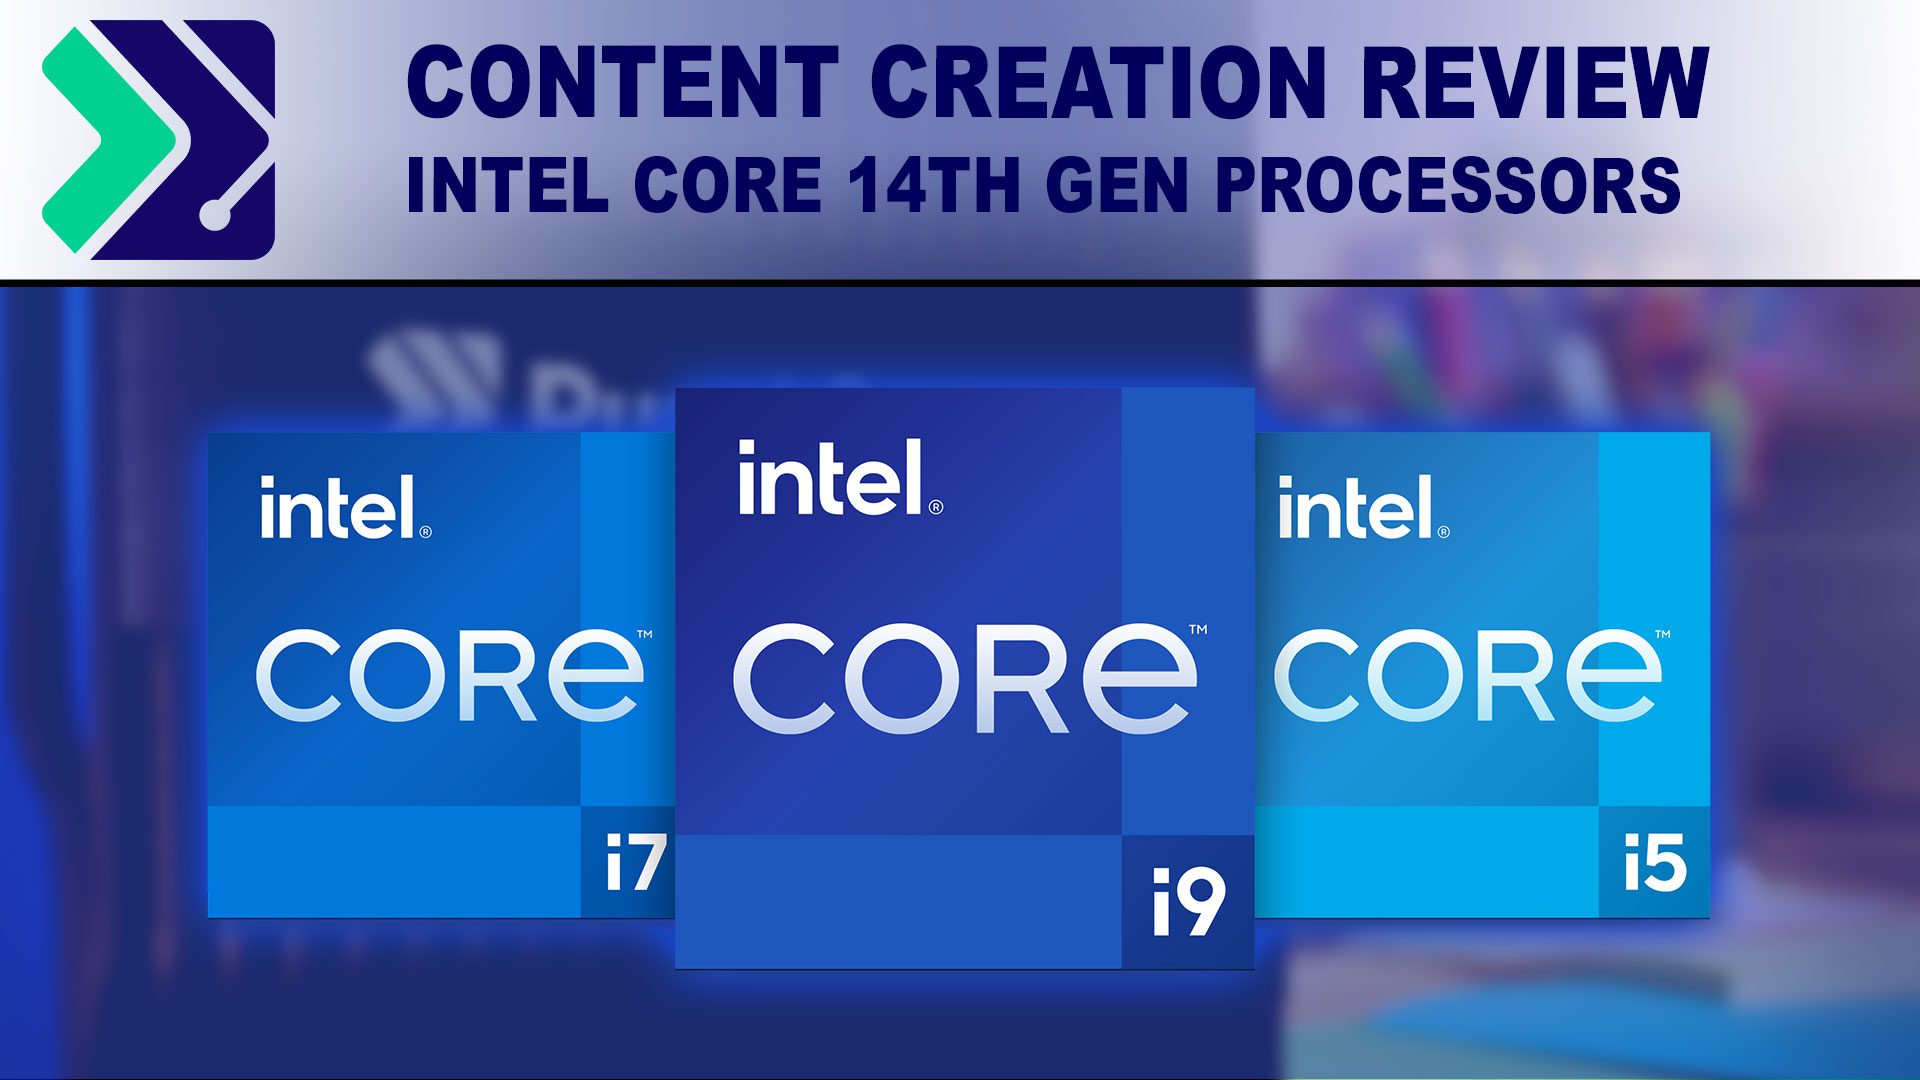 Intel Core 14th Gen Processors Content Creation Review